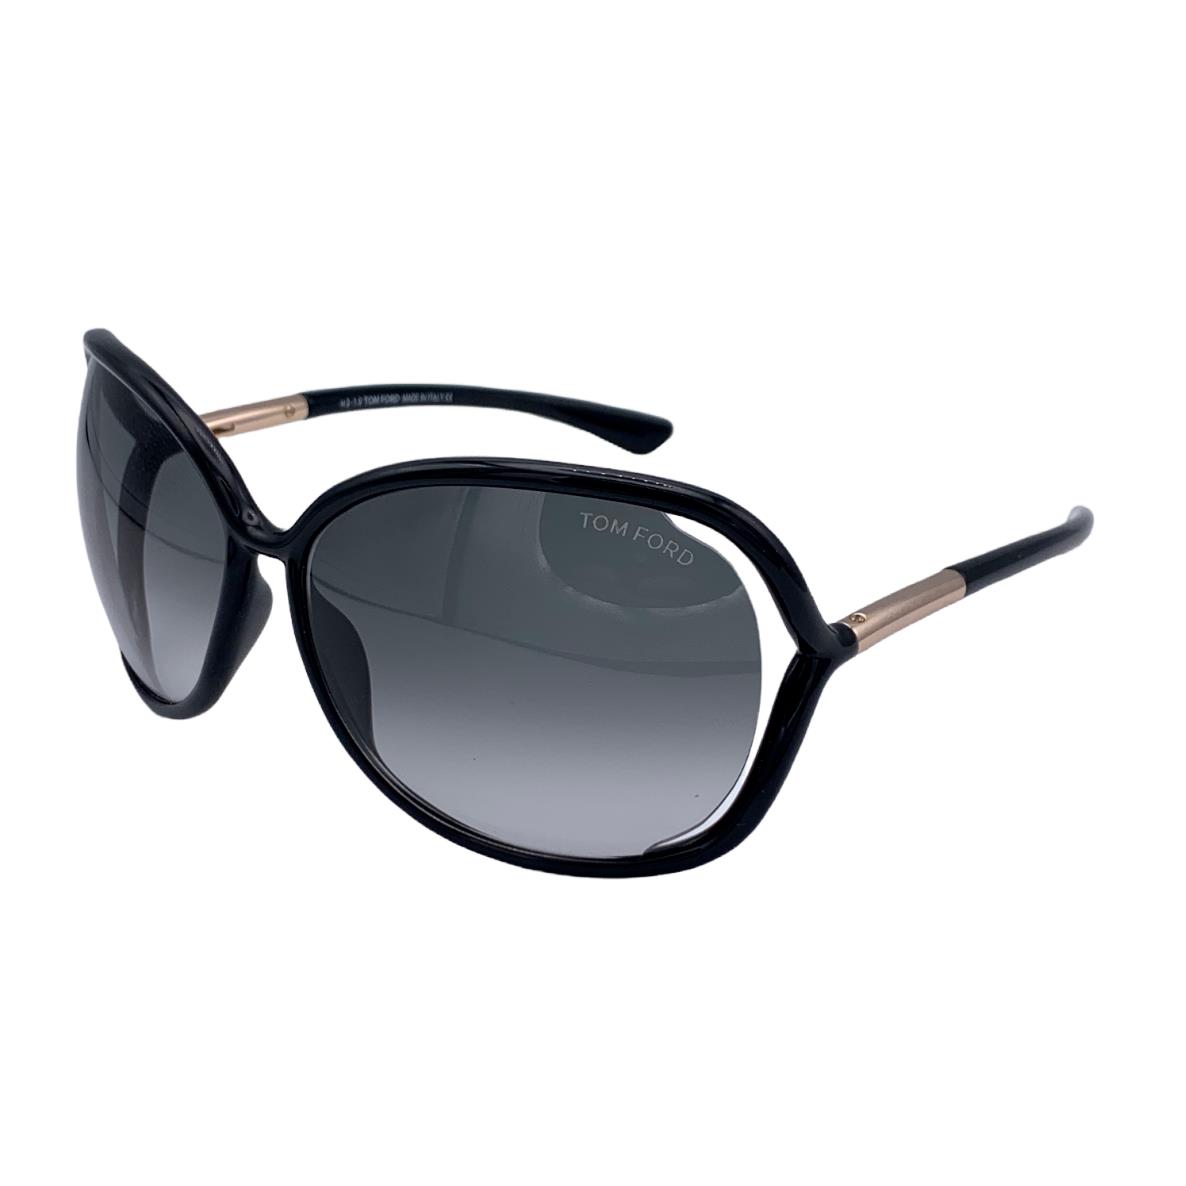 Tom Ford Sunglasses Raquel FT0076S 199 63mm Black Gold Grey Gradient